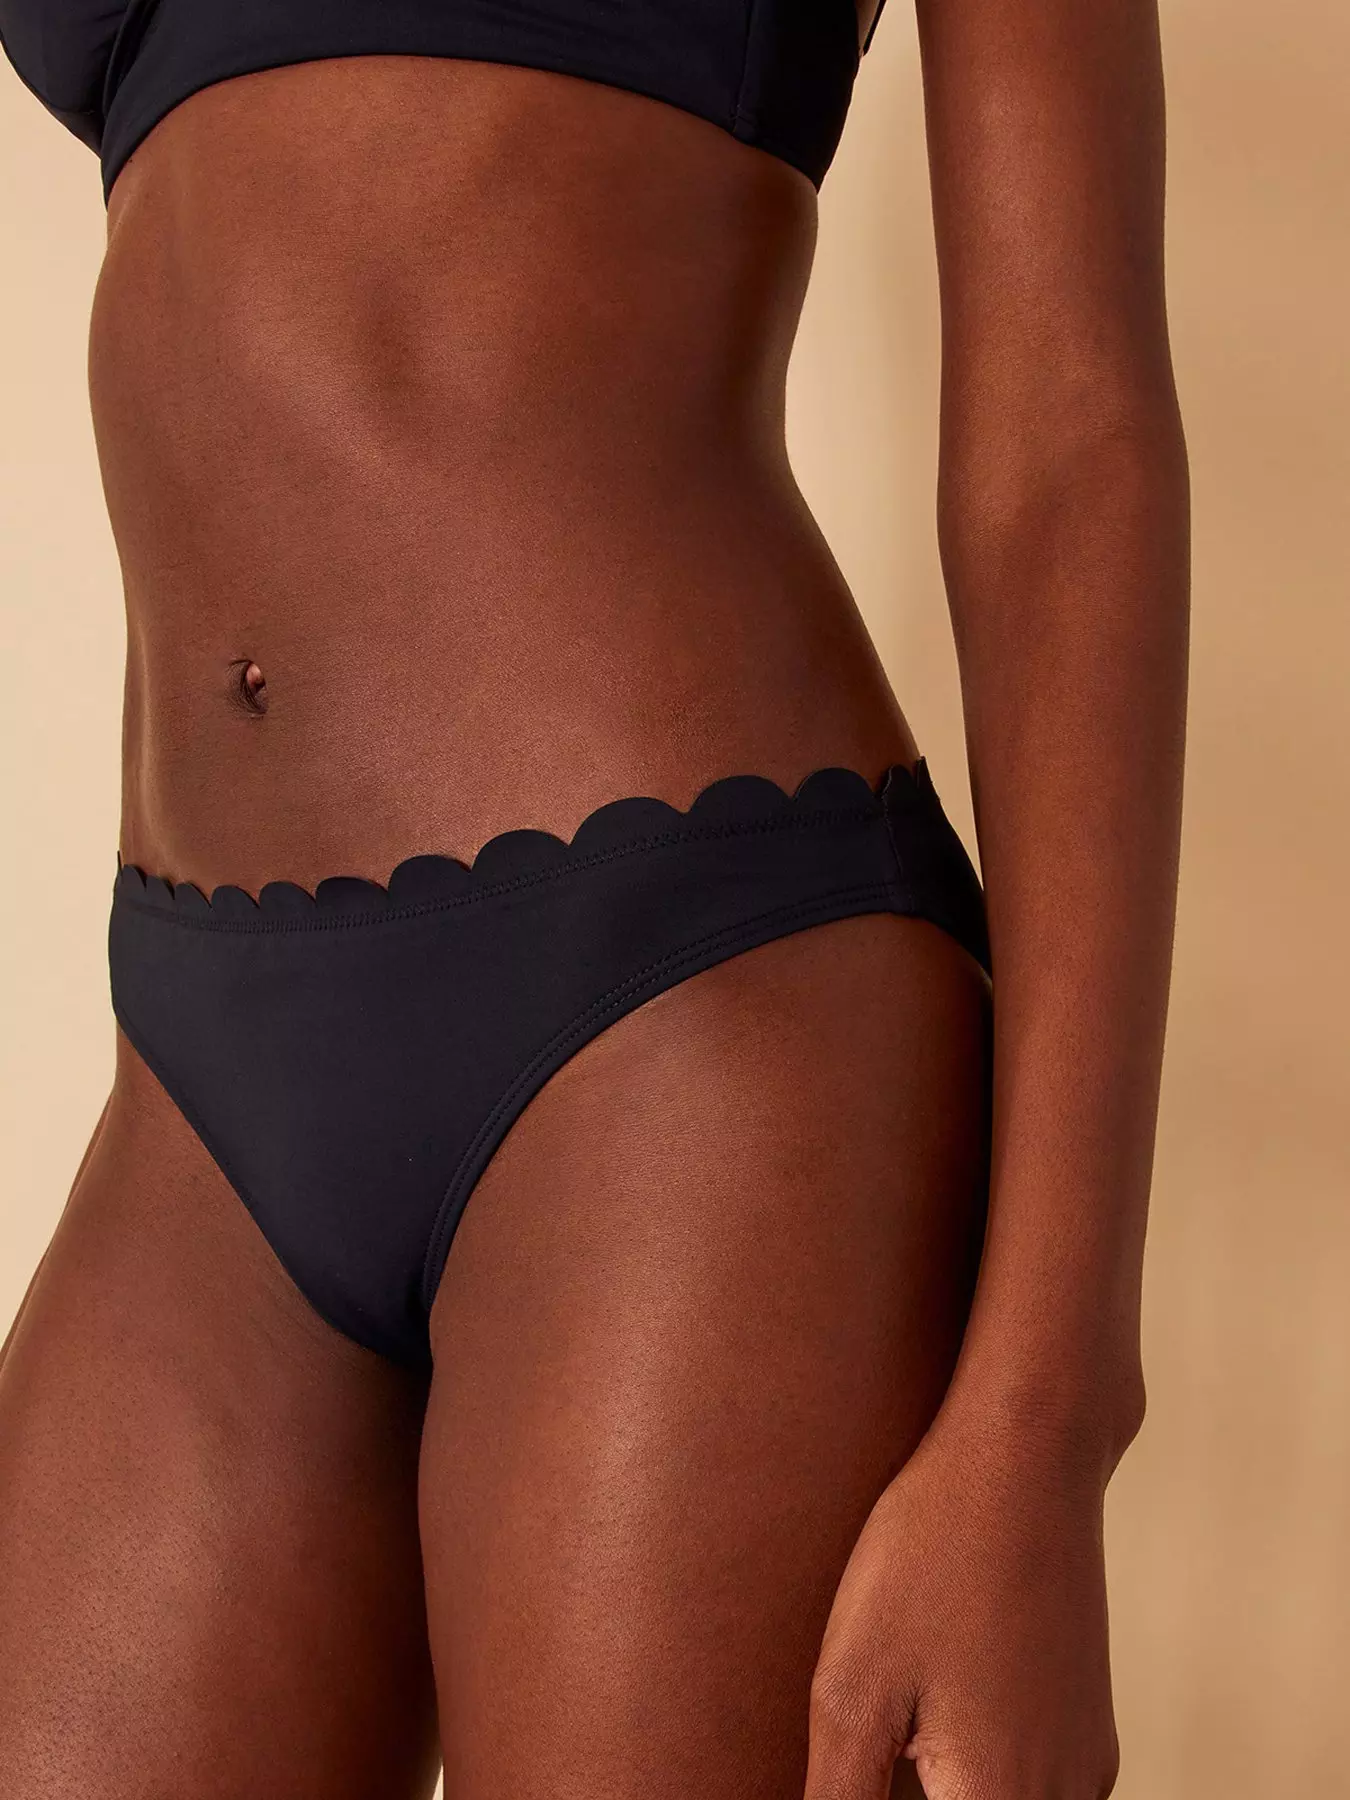 https://media.very.ie/i/littlewoodsireland/VELRR_SQ1_0000000004_BLACK_MDf/accessorize-scallop-trim-bikini-bottoms-black.jpg?$180x240_retinamobilex2$&fmt=webp